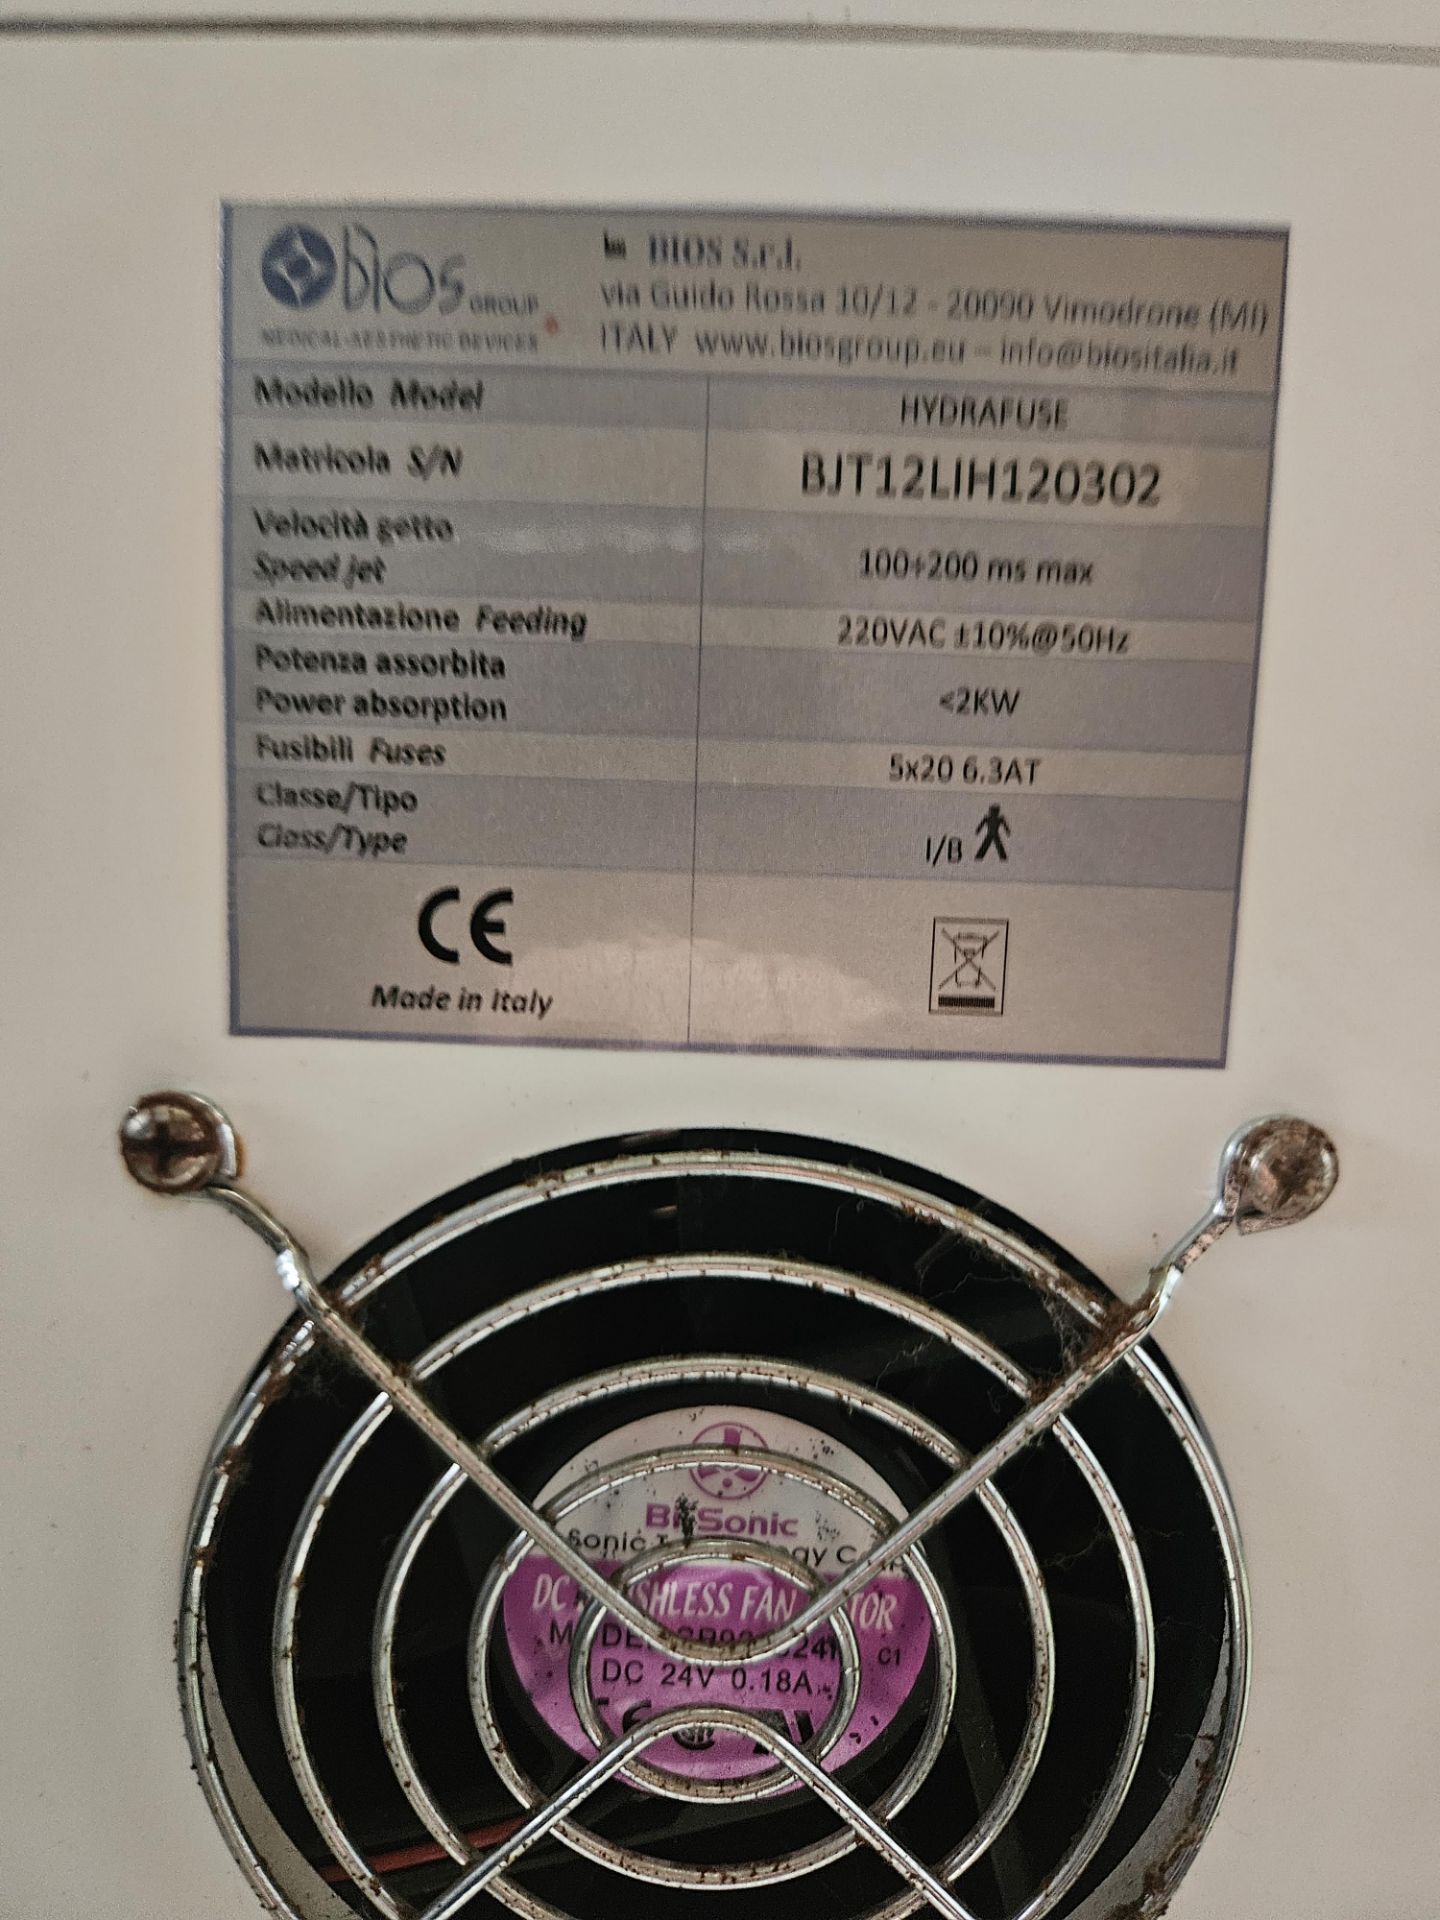 BIOS Group medical asthetic device HYDRAFUSE Serial number BJT12LIH120302 - Bild 5 aus 5